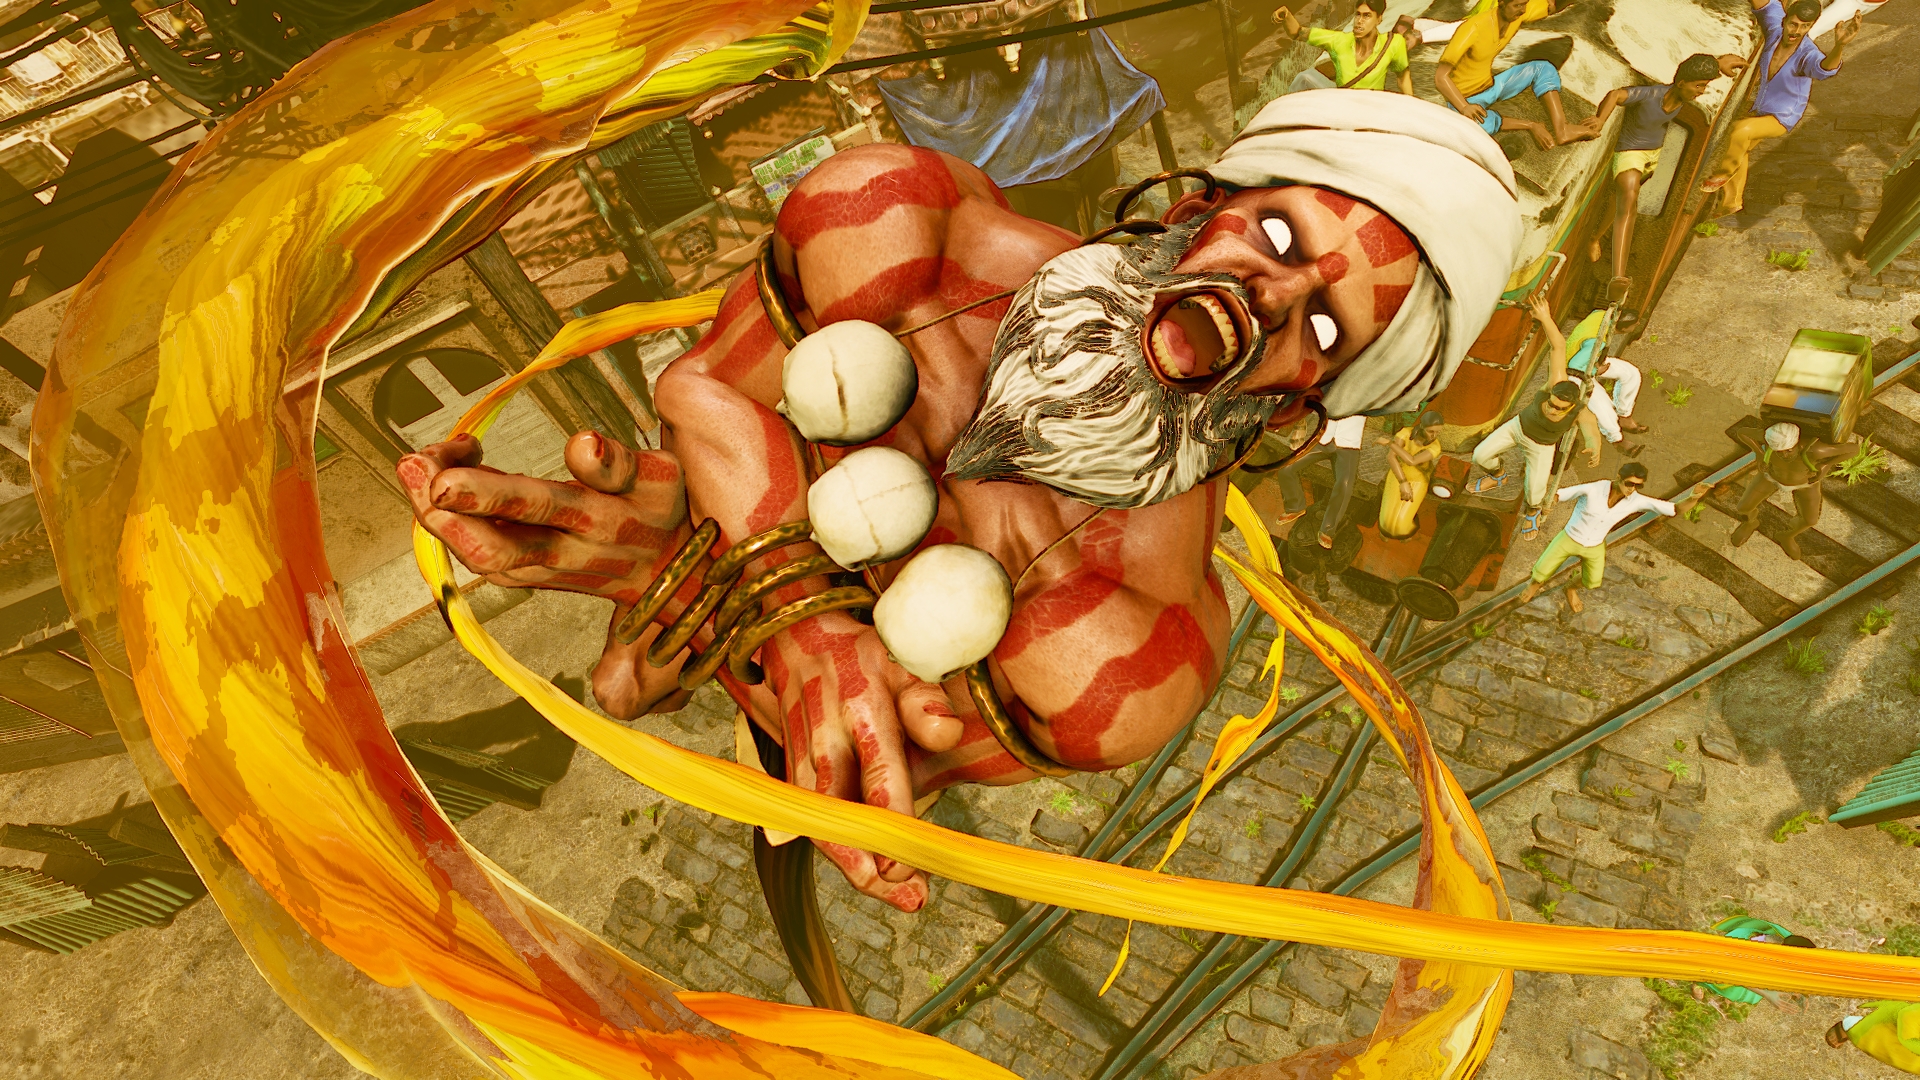 Street Fighter V newcomer Laura leaked - Gematsu